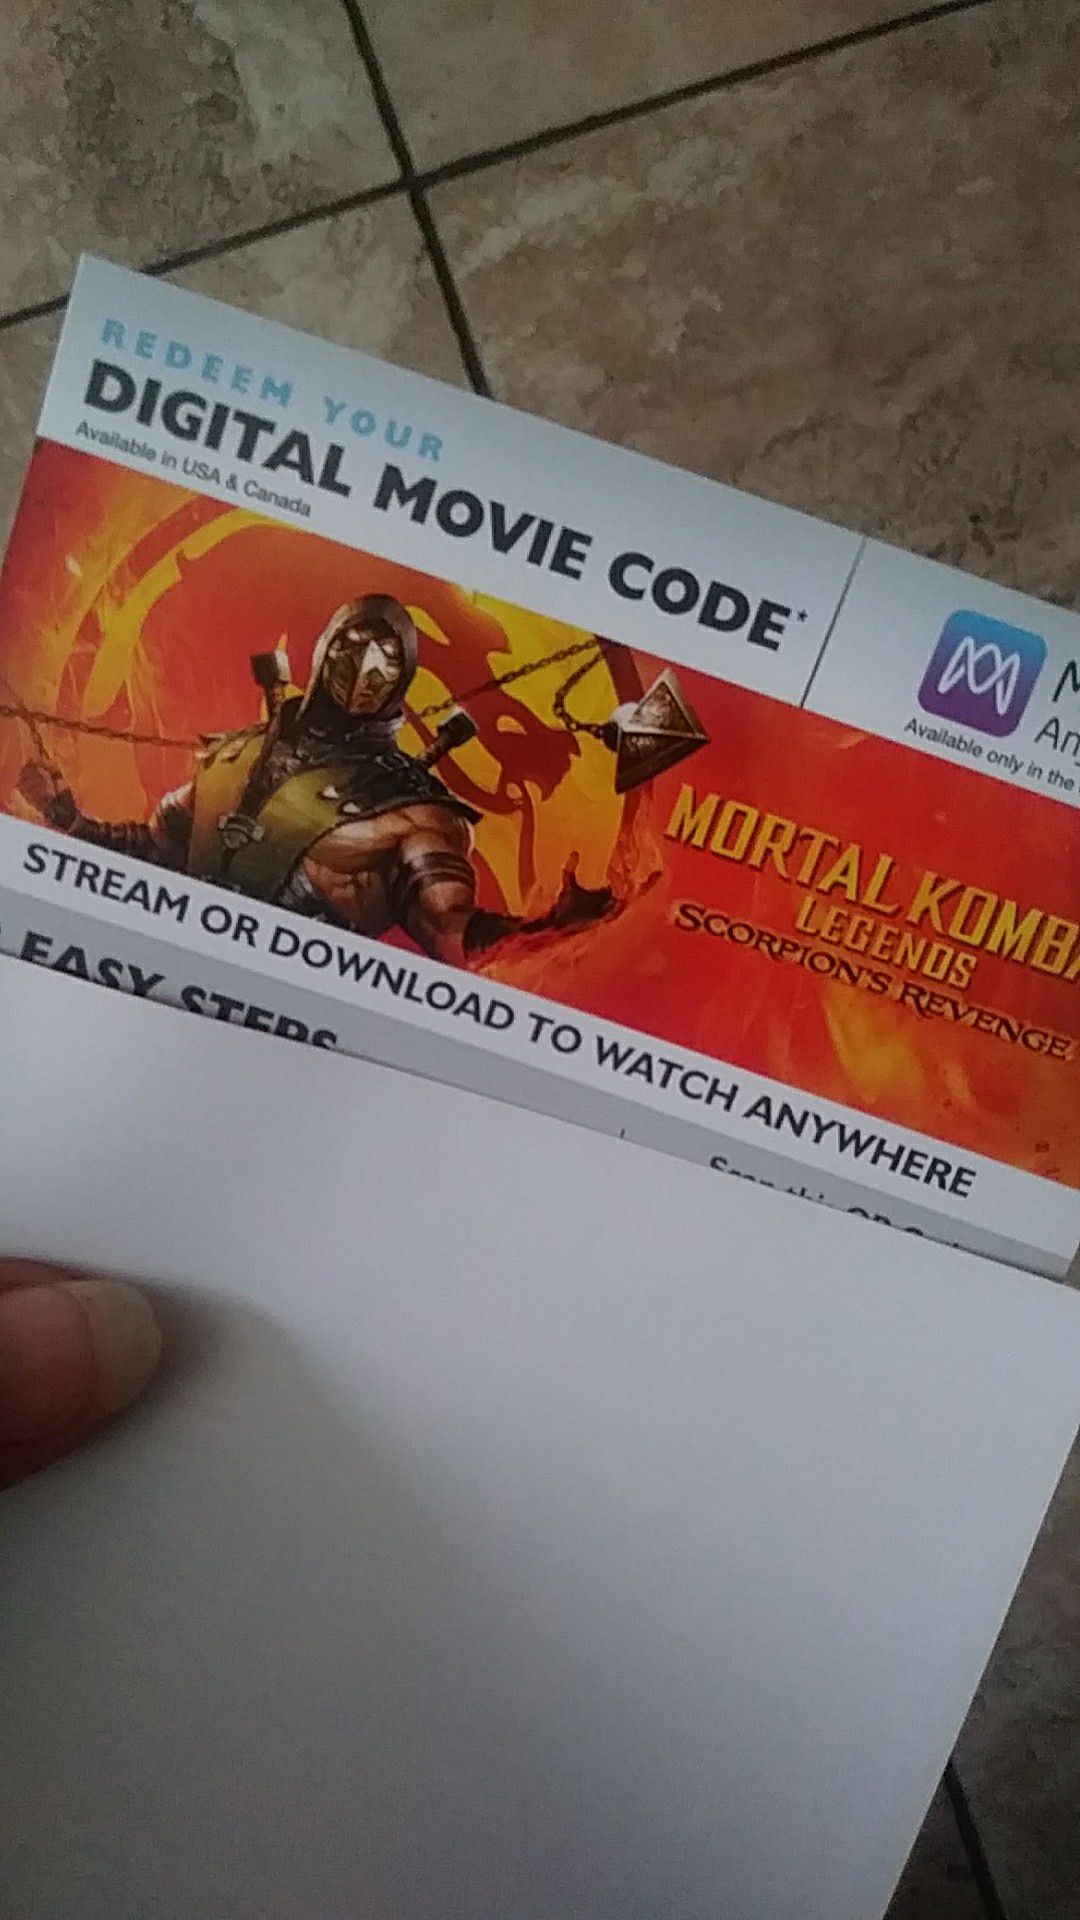 Mortal Kombat digital movie